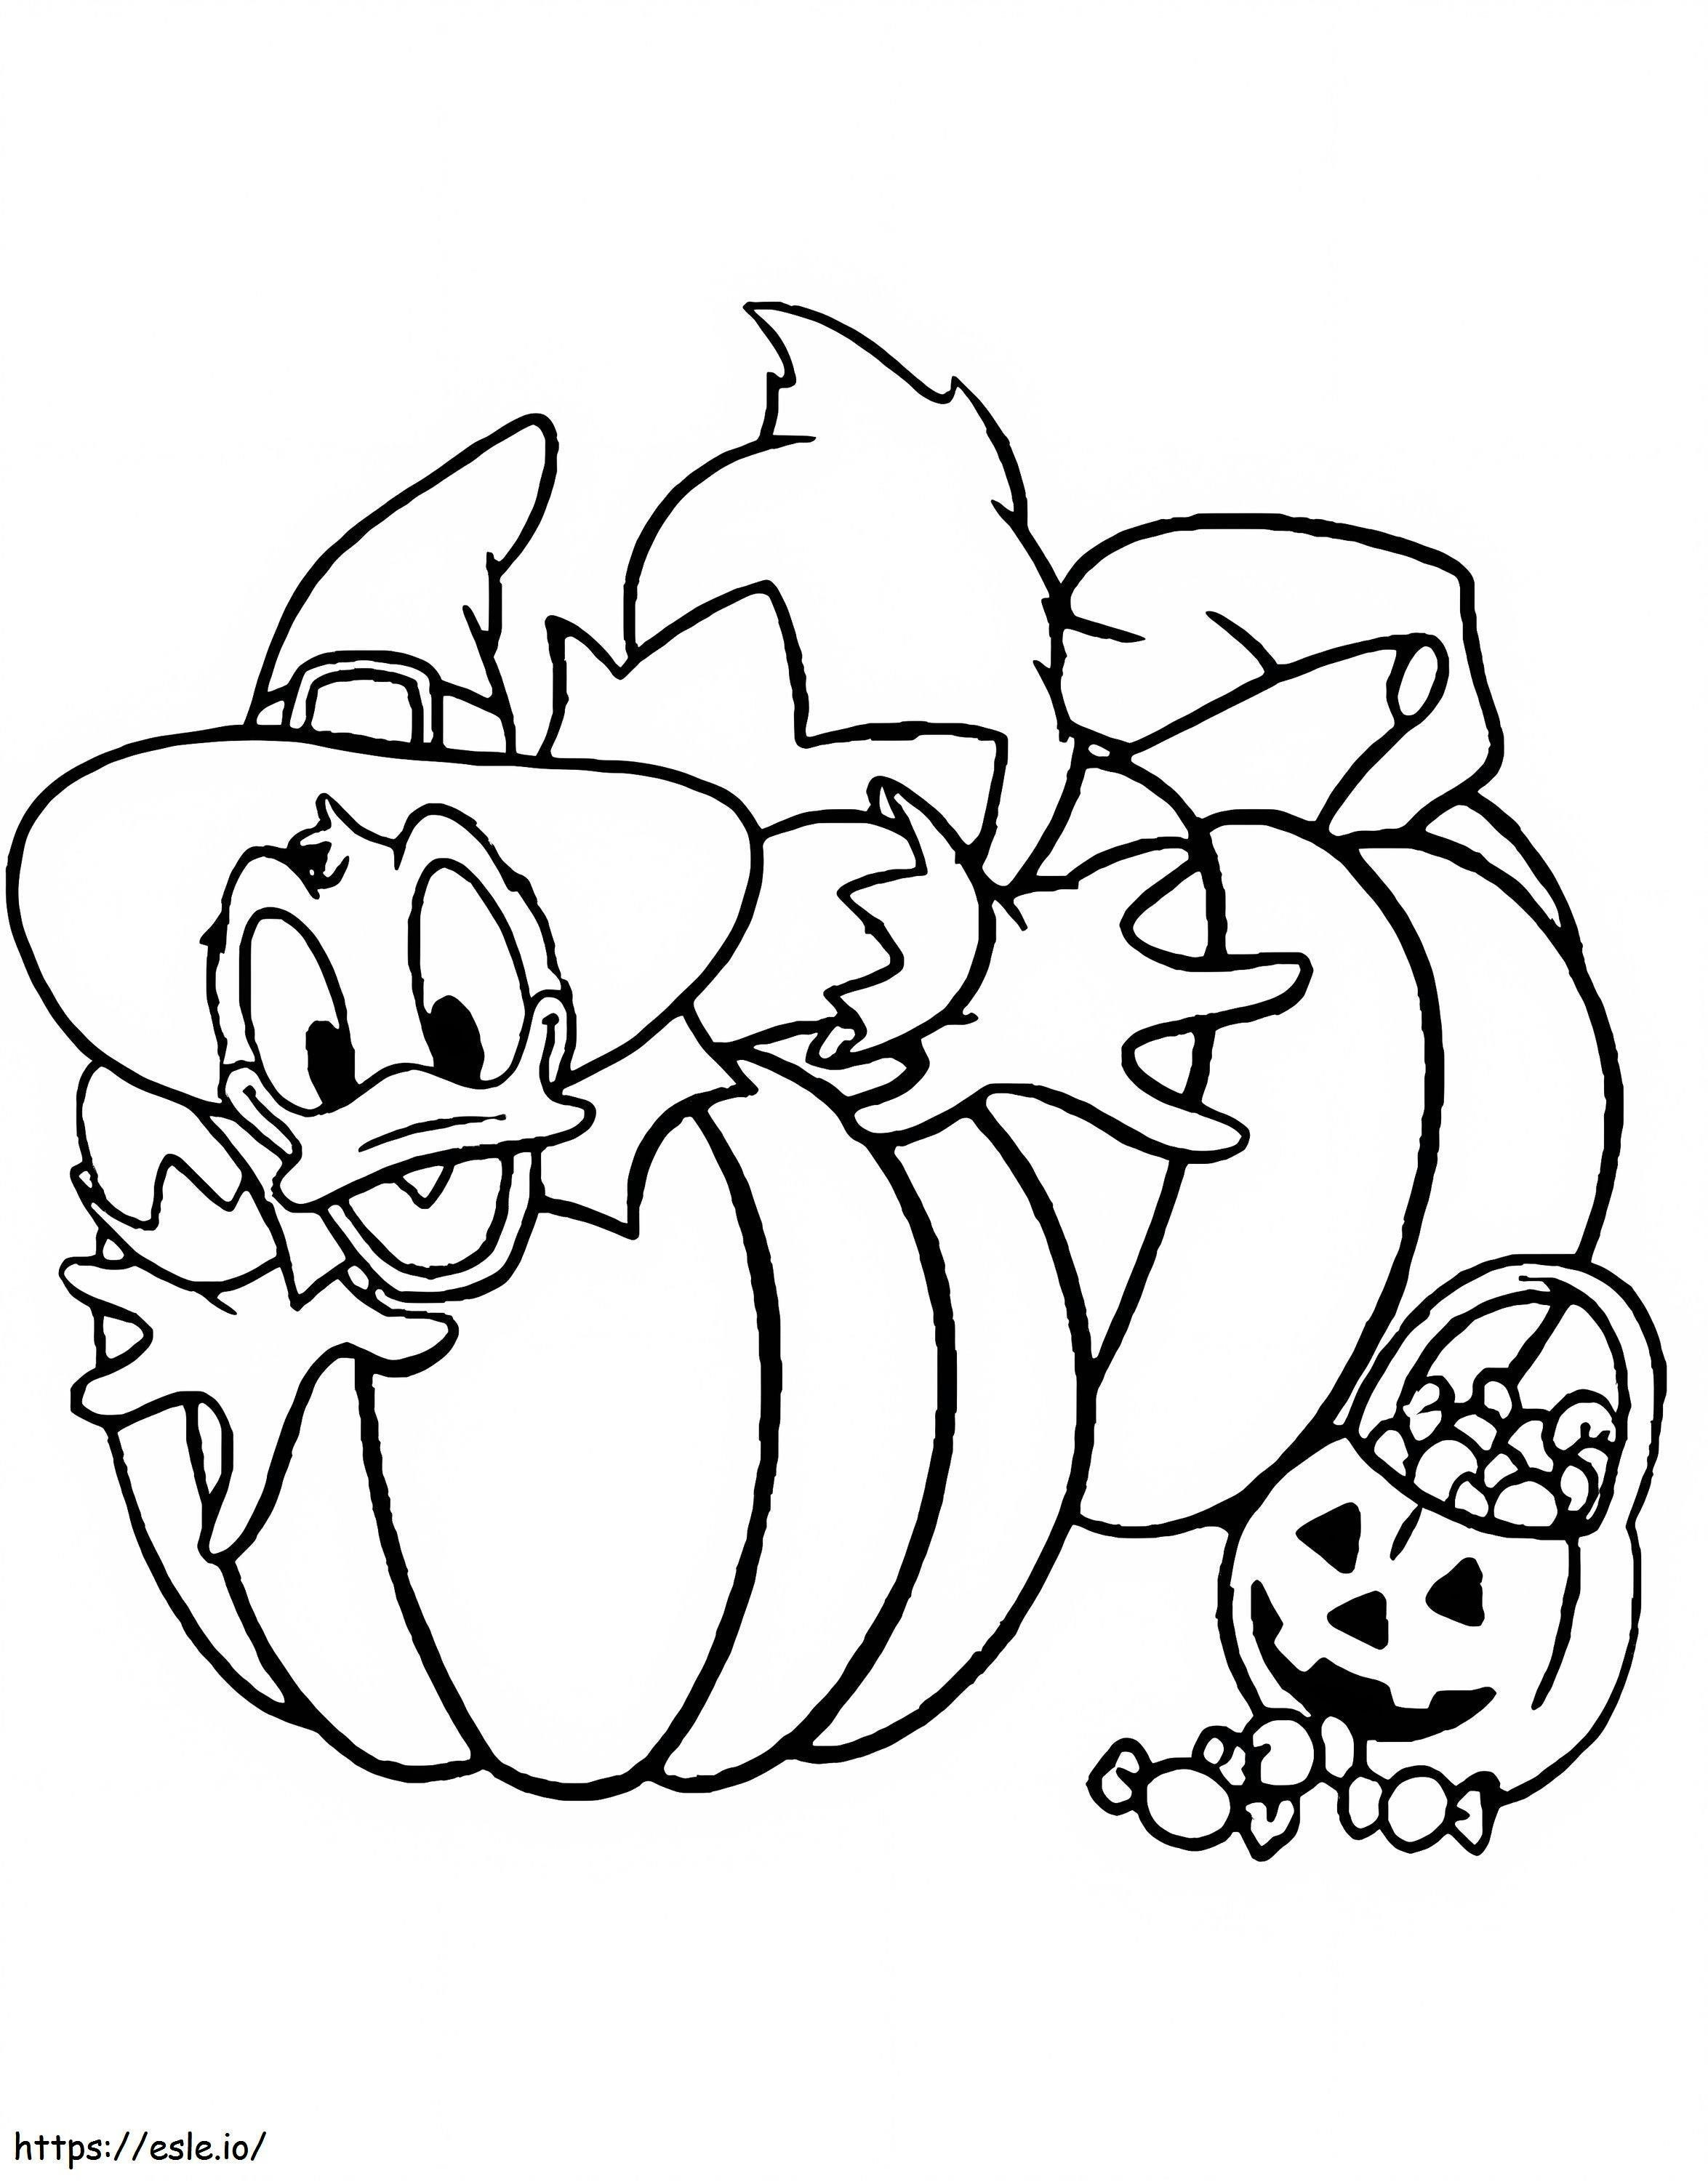 Kaczor Donald na Halloween kolorowanka